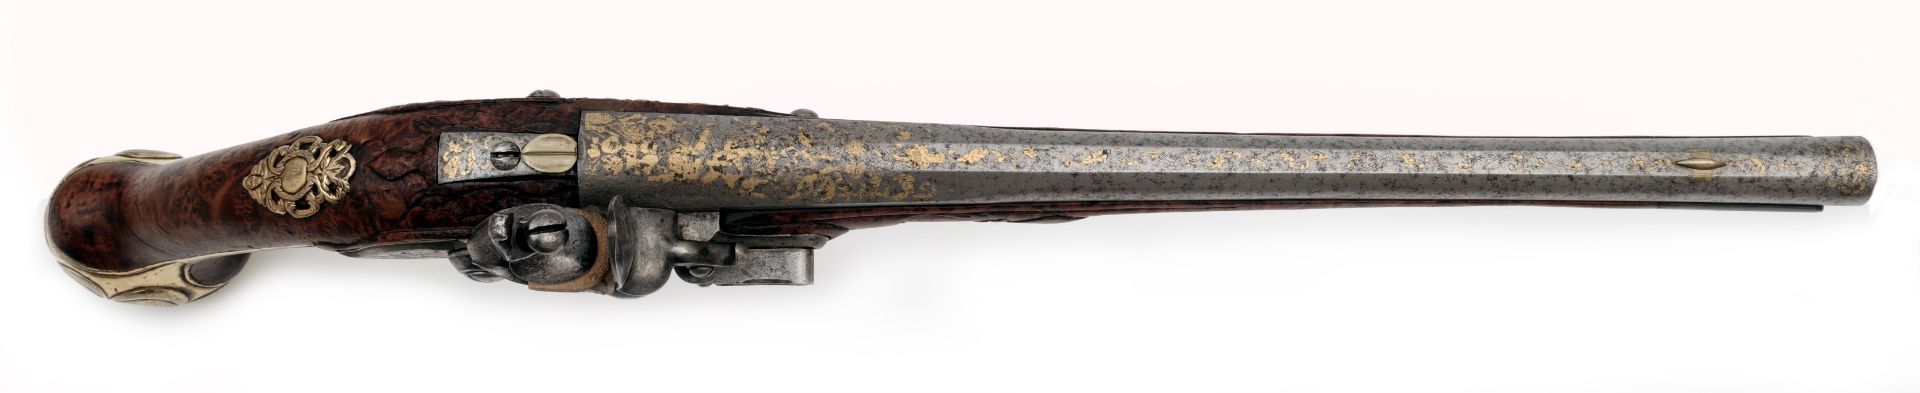 A Long Flintlock Pistol by Joseph Hamerl - Image 5 of 8